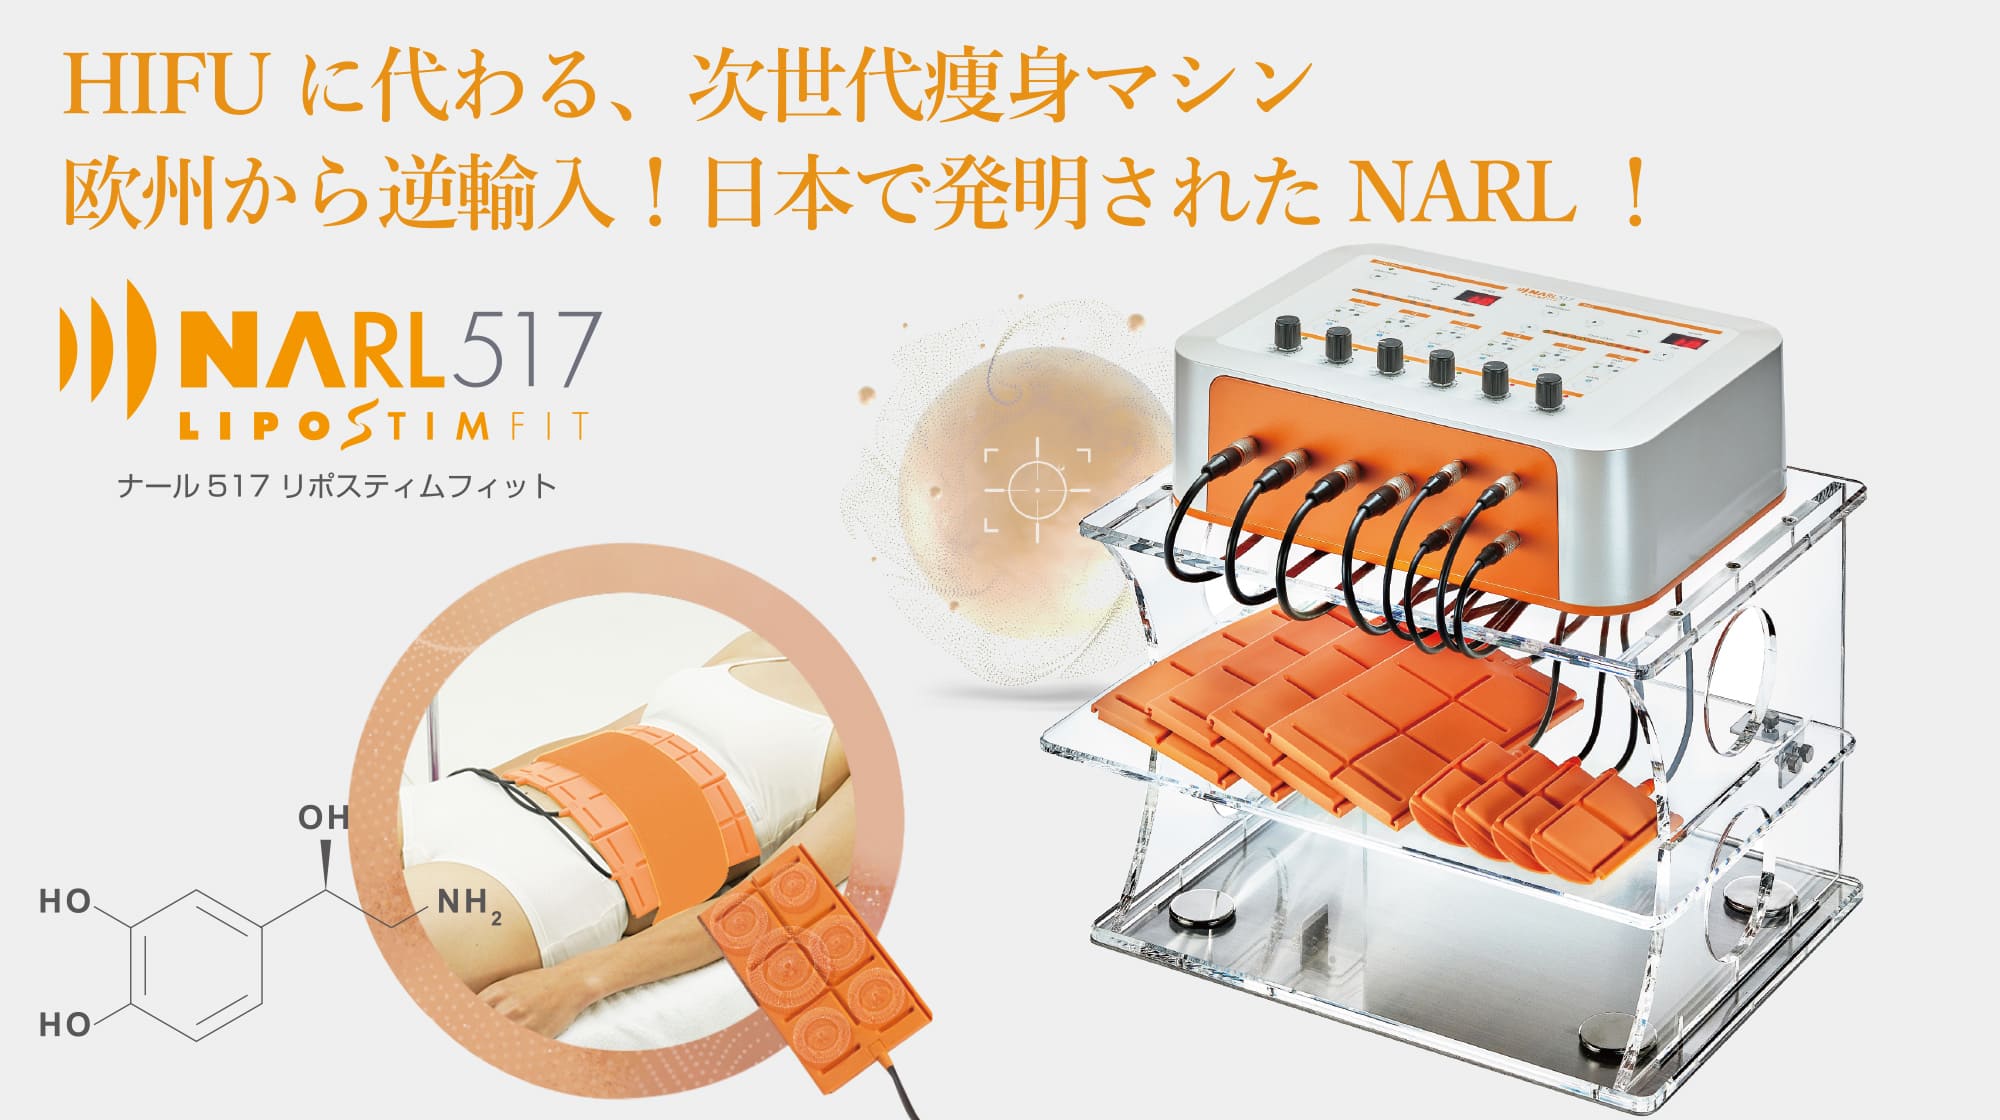 NARL517 リポスティムフィット｜HIFUに代わる、次世代痩身マシン 欧州から逆輸入！日本で発明されたNARL！